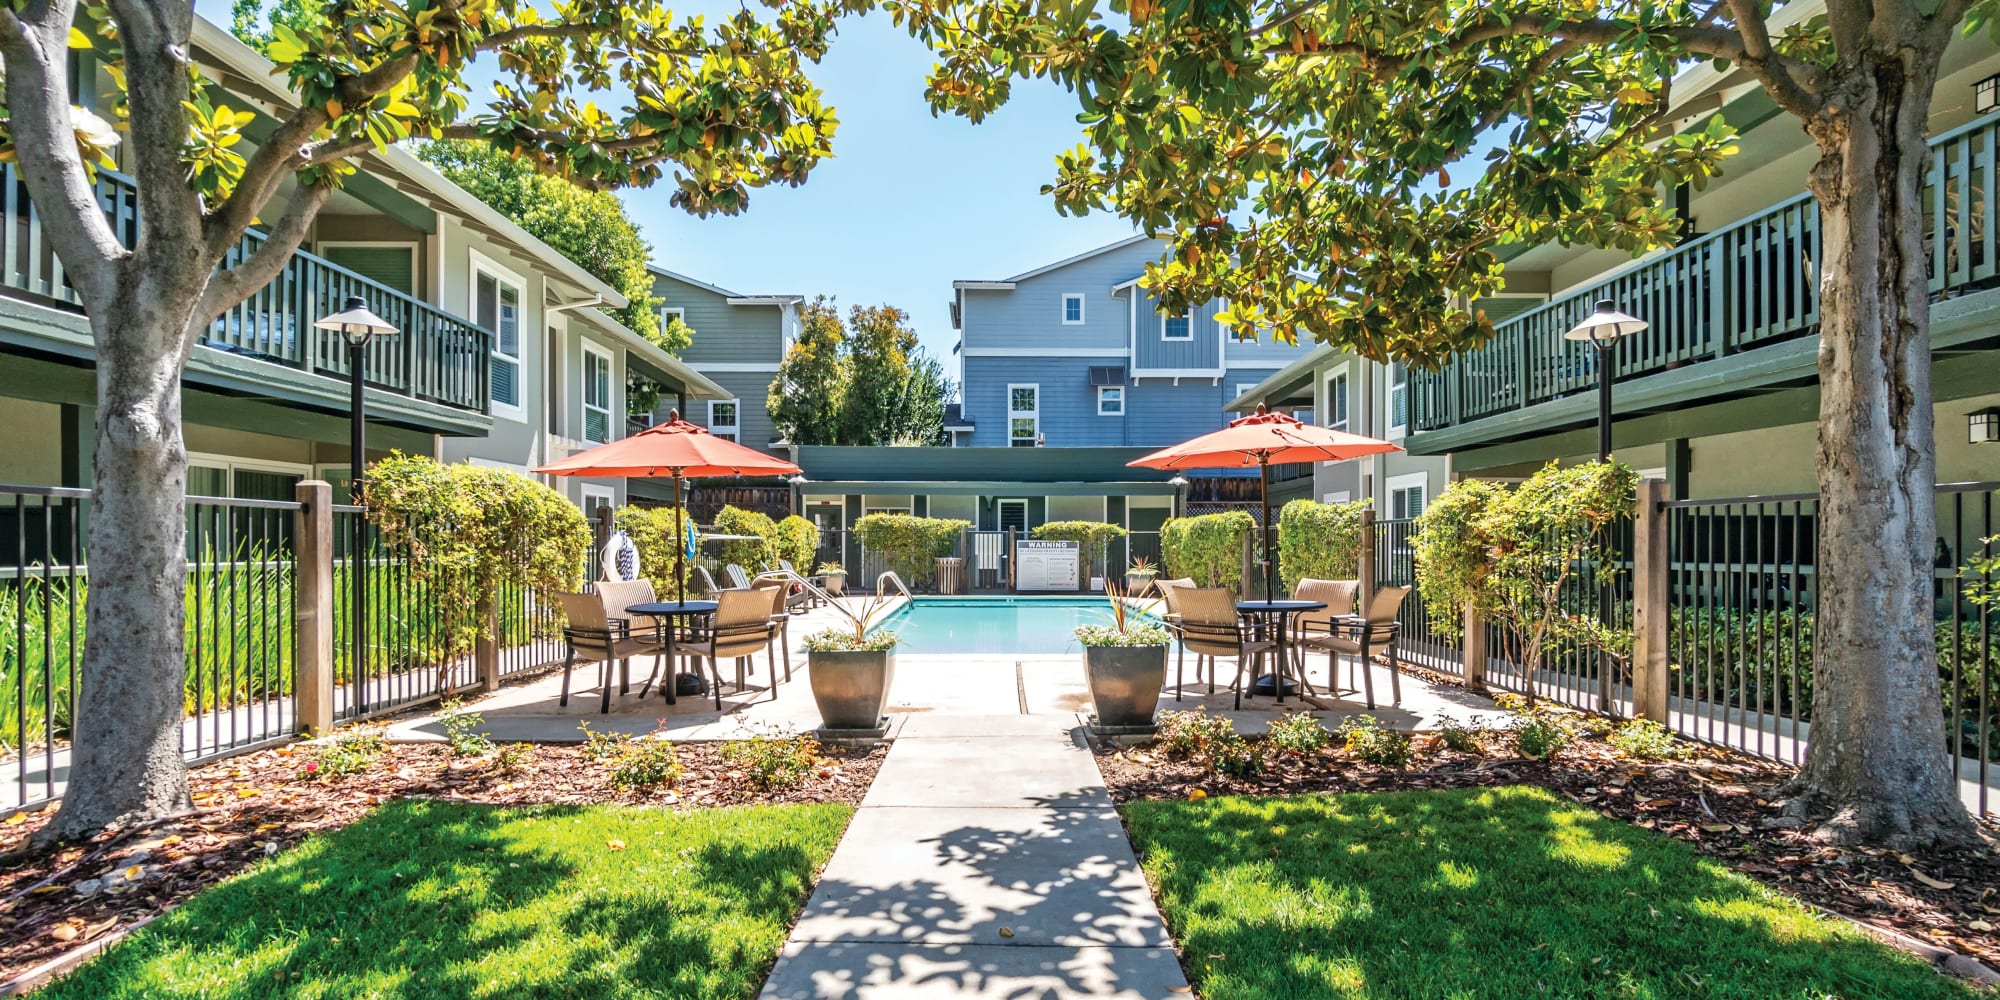 Enjoy a swimming pool at Pleasanton Glen Apartment Homes in Pleasanton, California